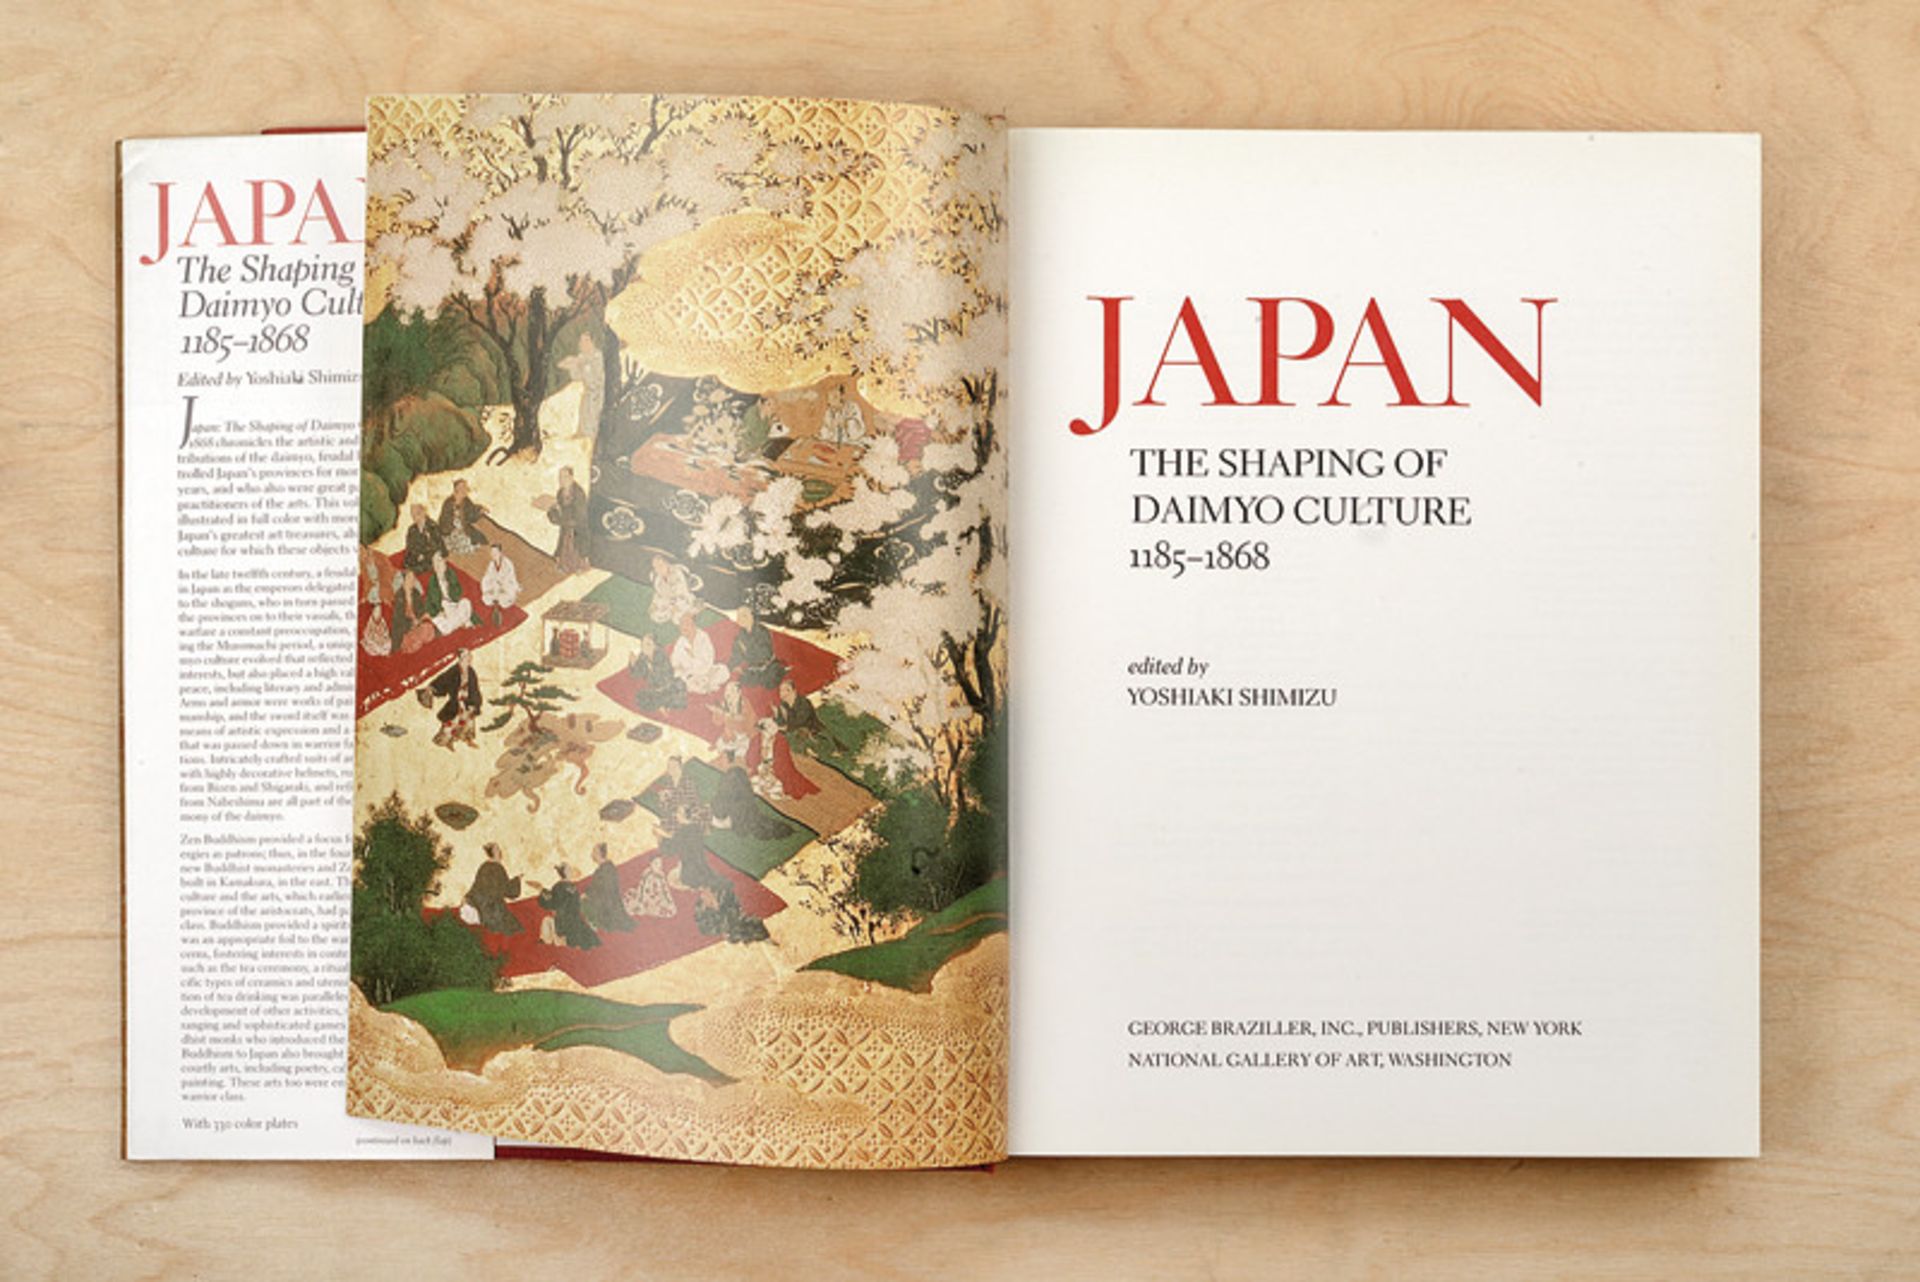 Shimizu, Yoshiyaki dating: 20th Century provenance: USA "Japan, The Shaping of Daimyo Culture 1185- - Image 2 of 4